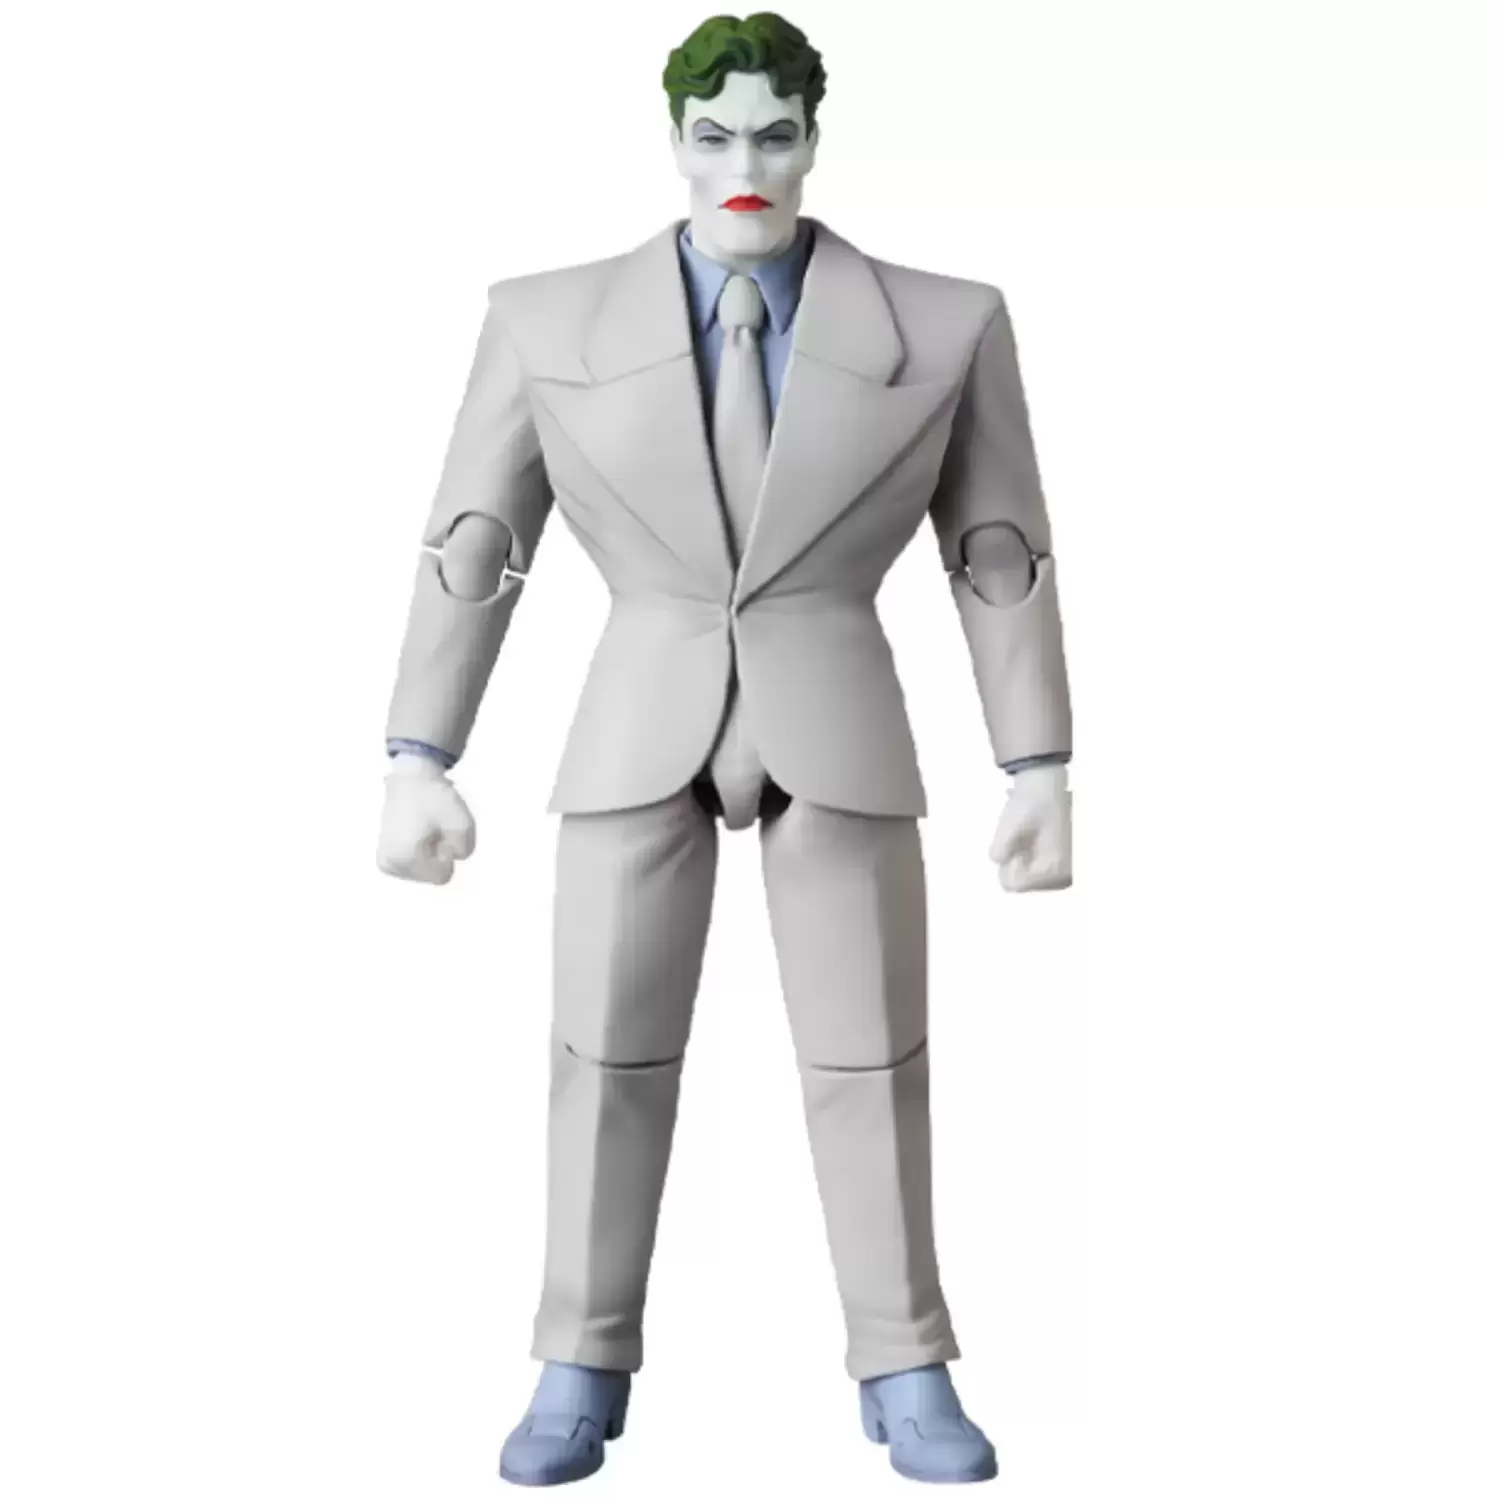 MAFEX (Medicom Toy) - The Joker - The Dark Knight Returns